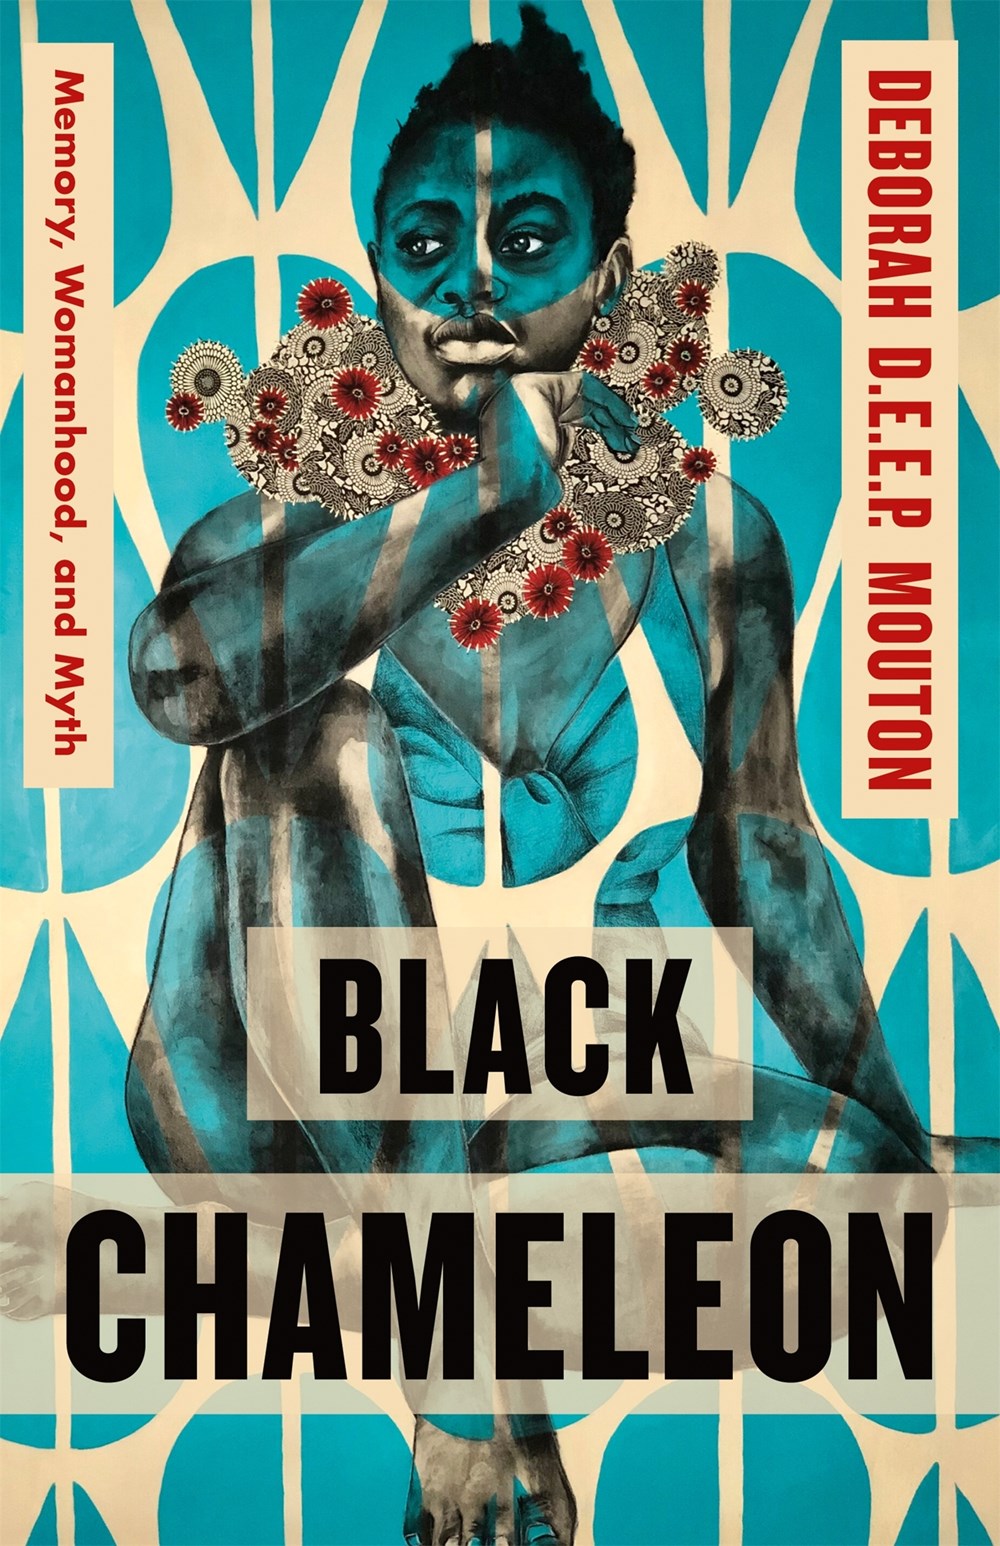 Black Chameleon: Memory, Womanhood, and Myth